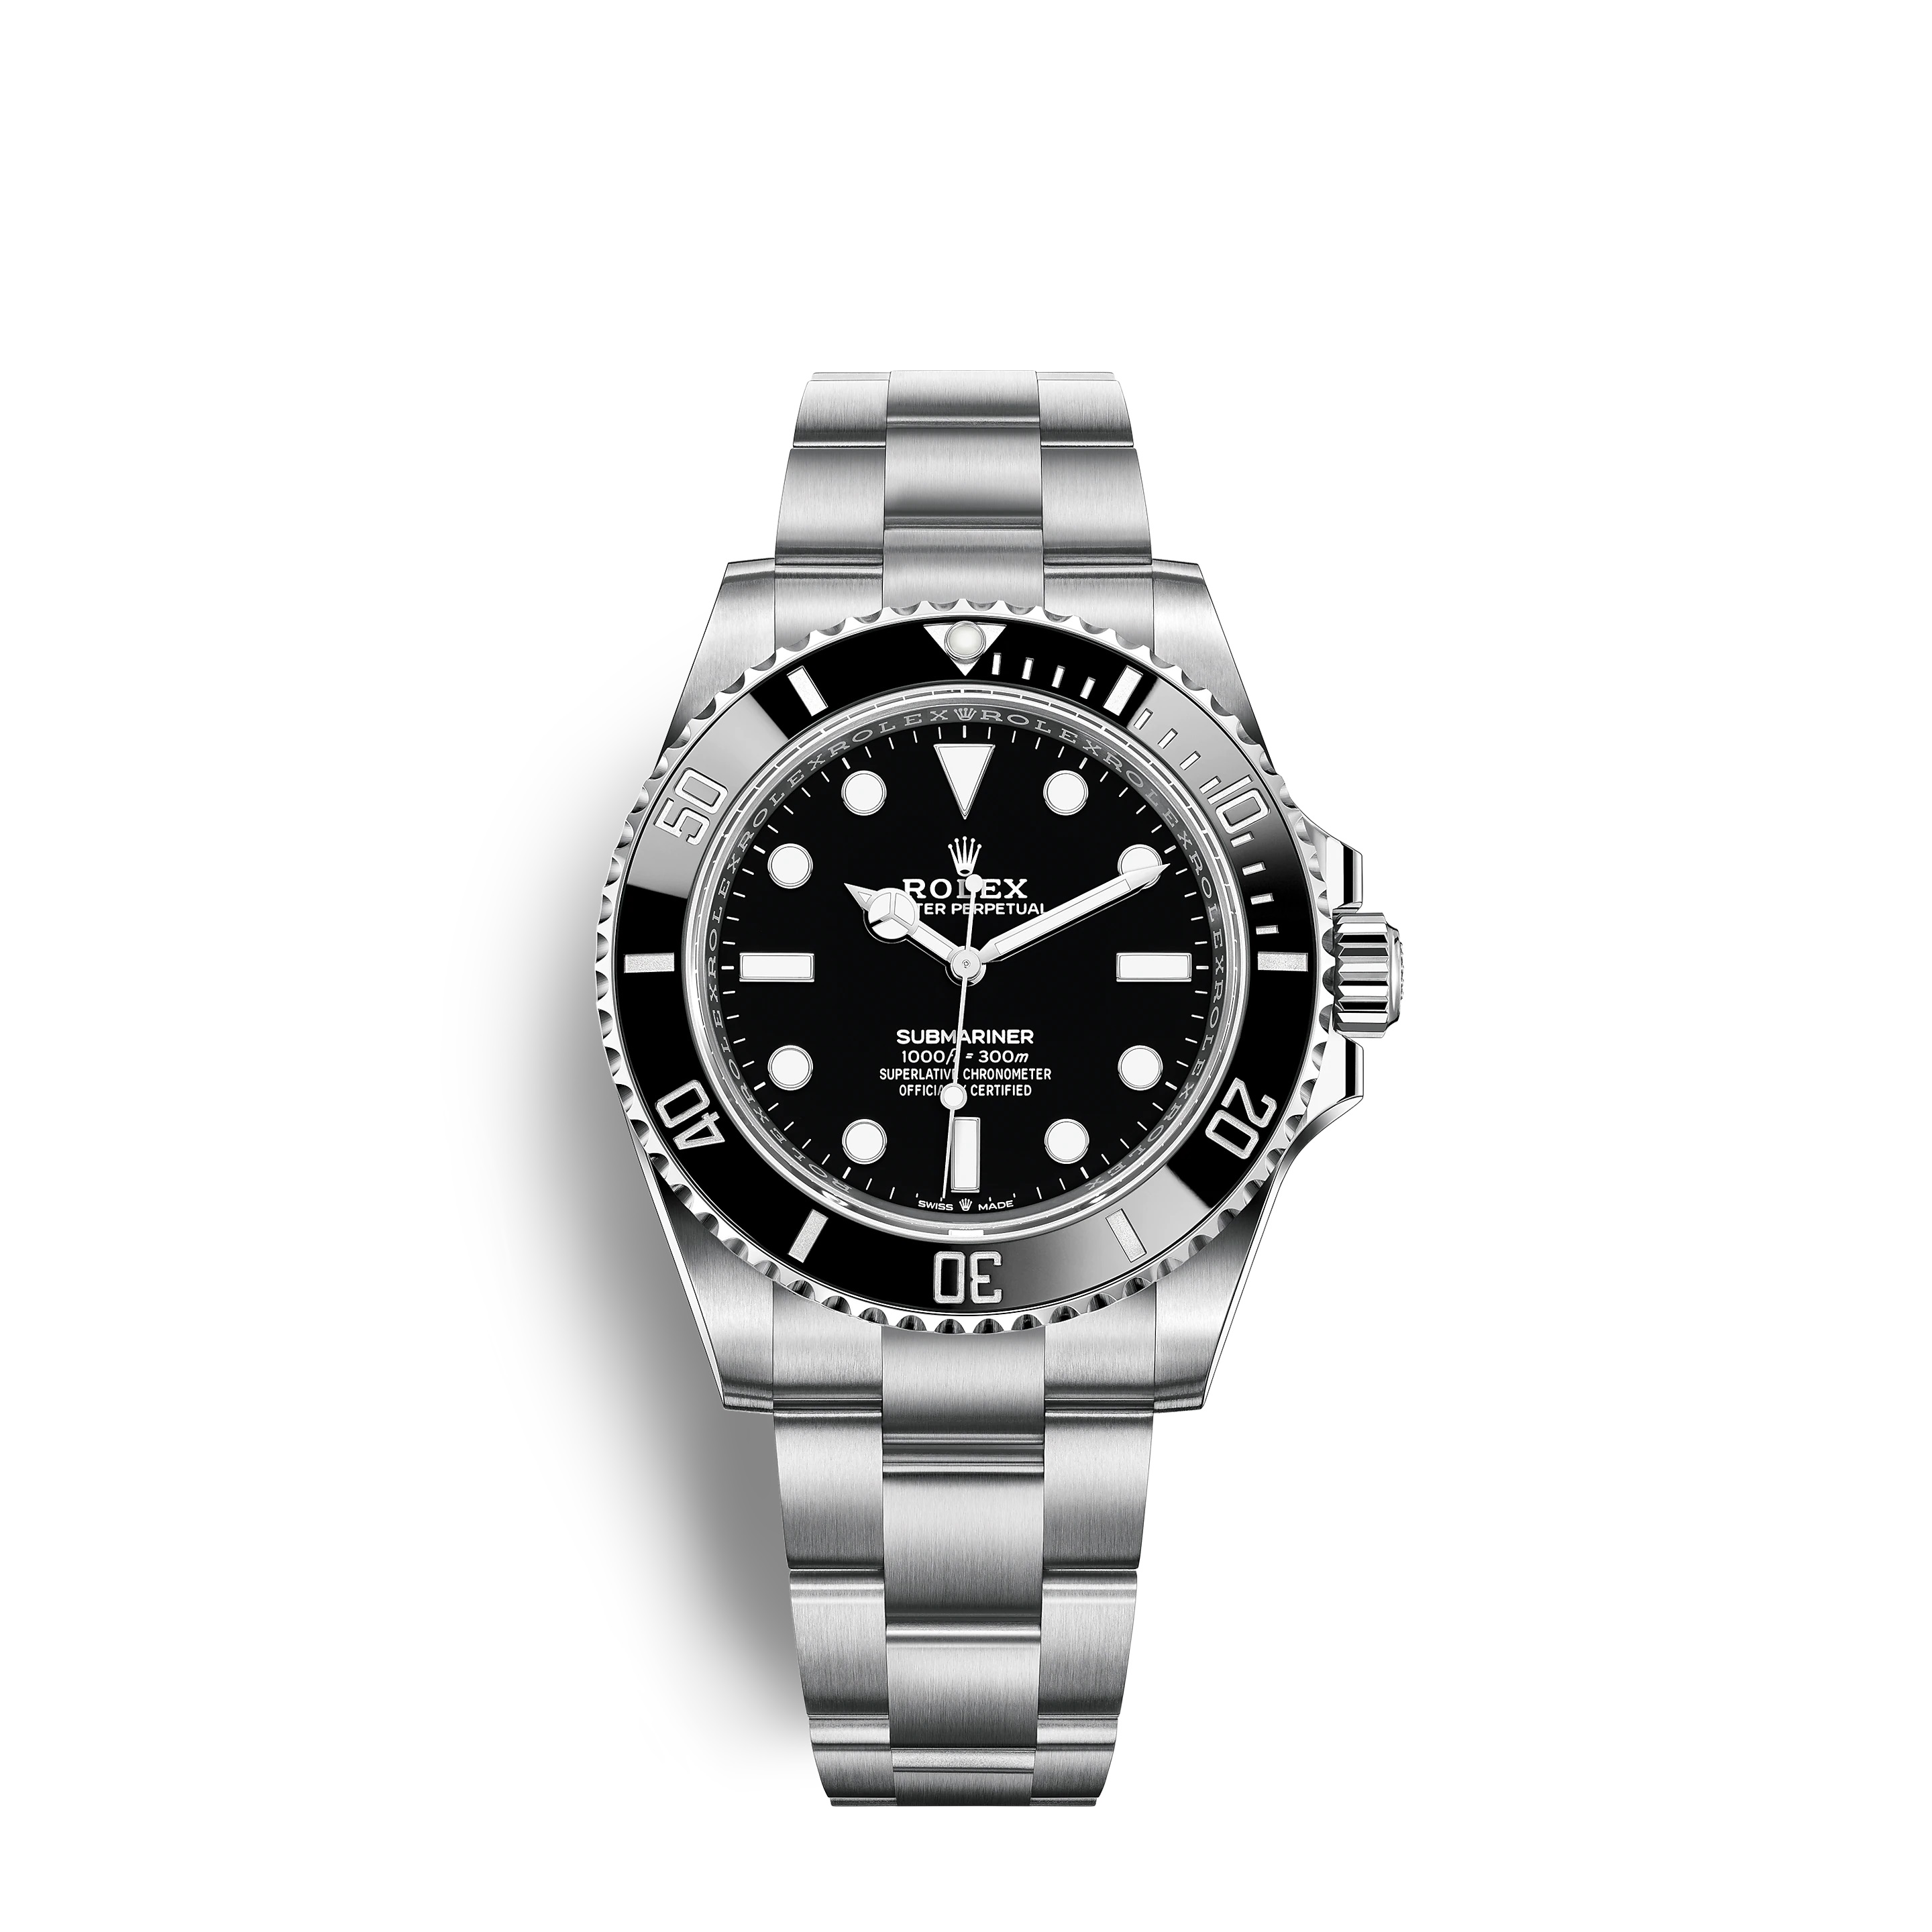 Submariner 124060 Stainless Steel Watch (Black)